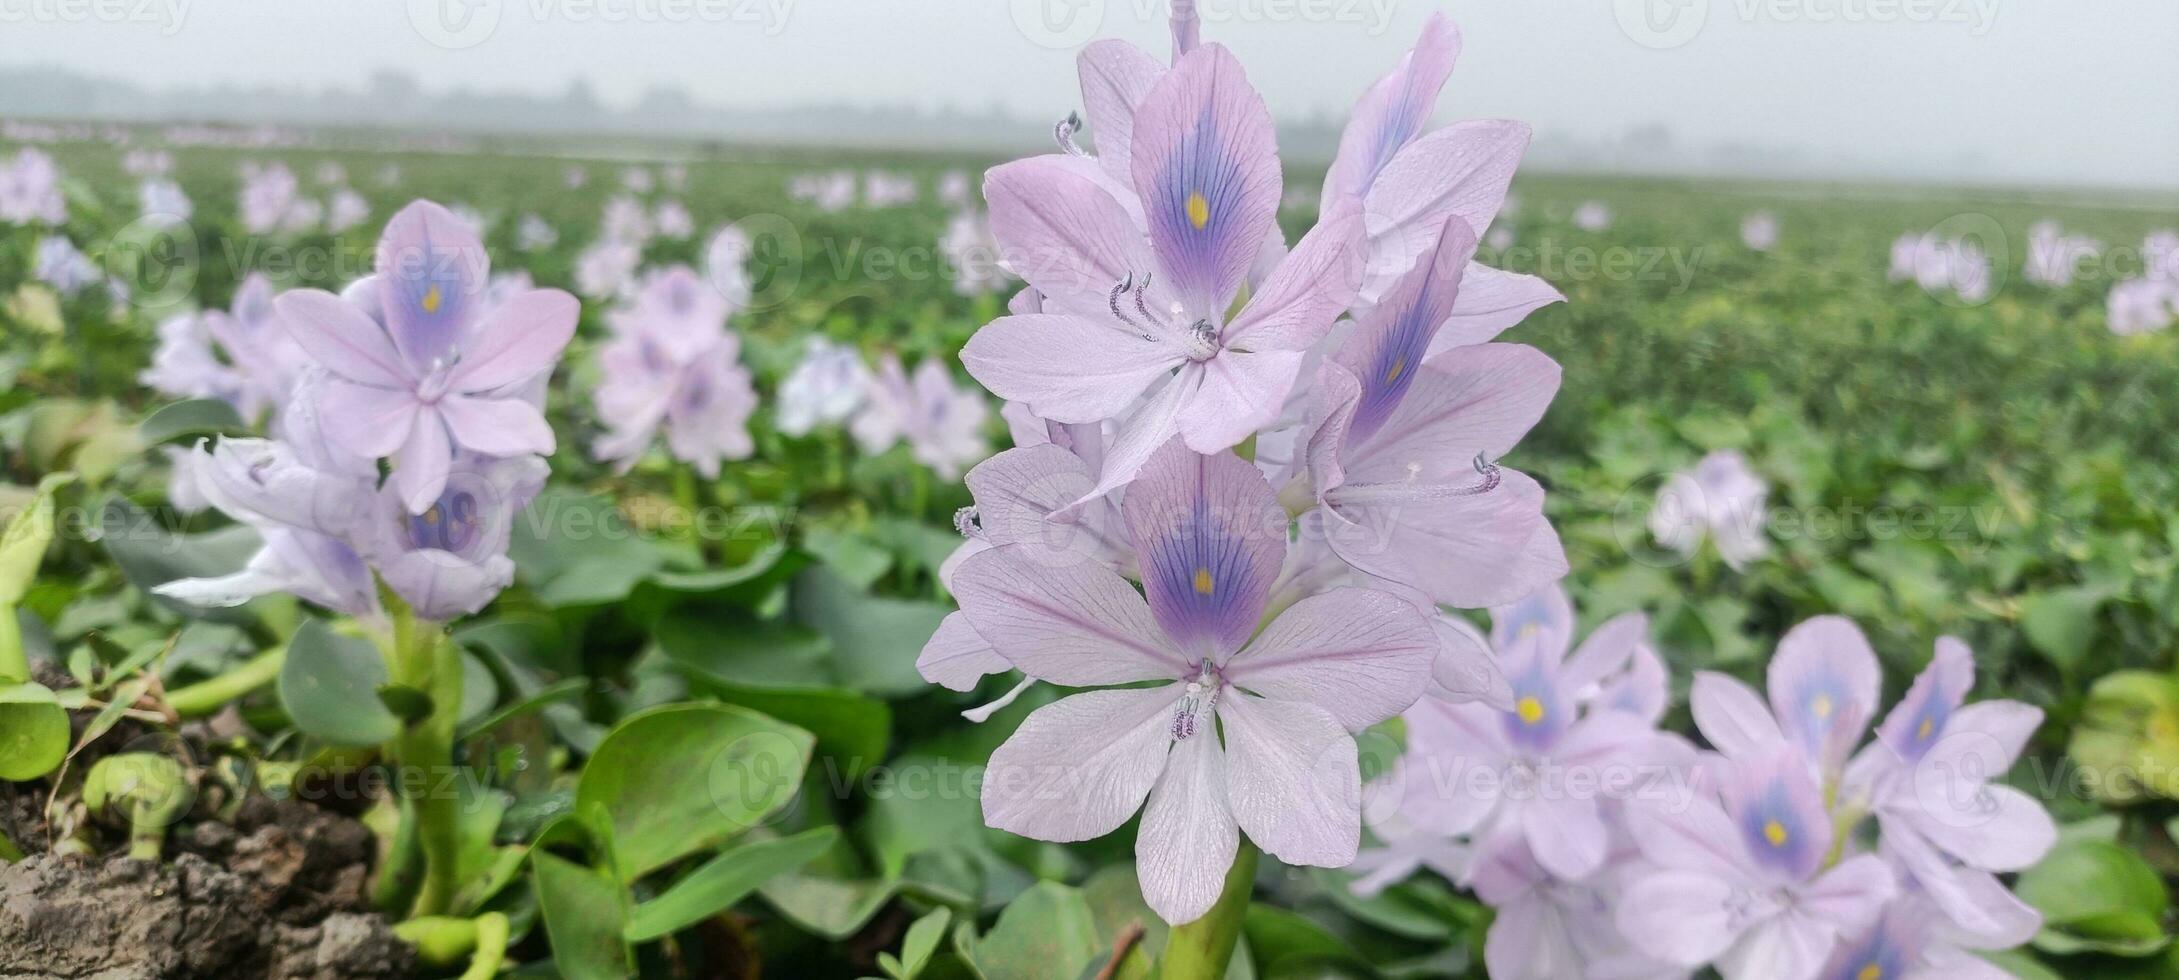 Common water hyacinth photo